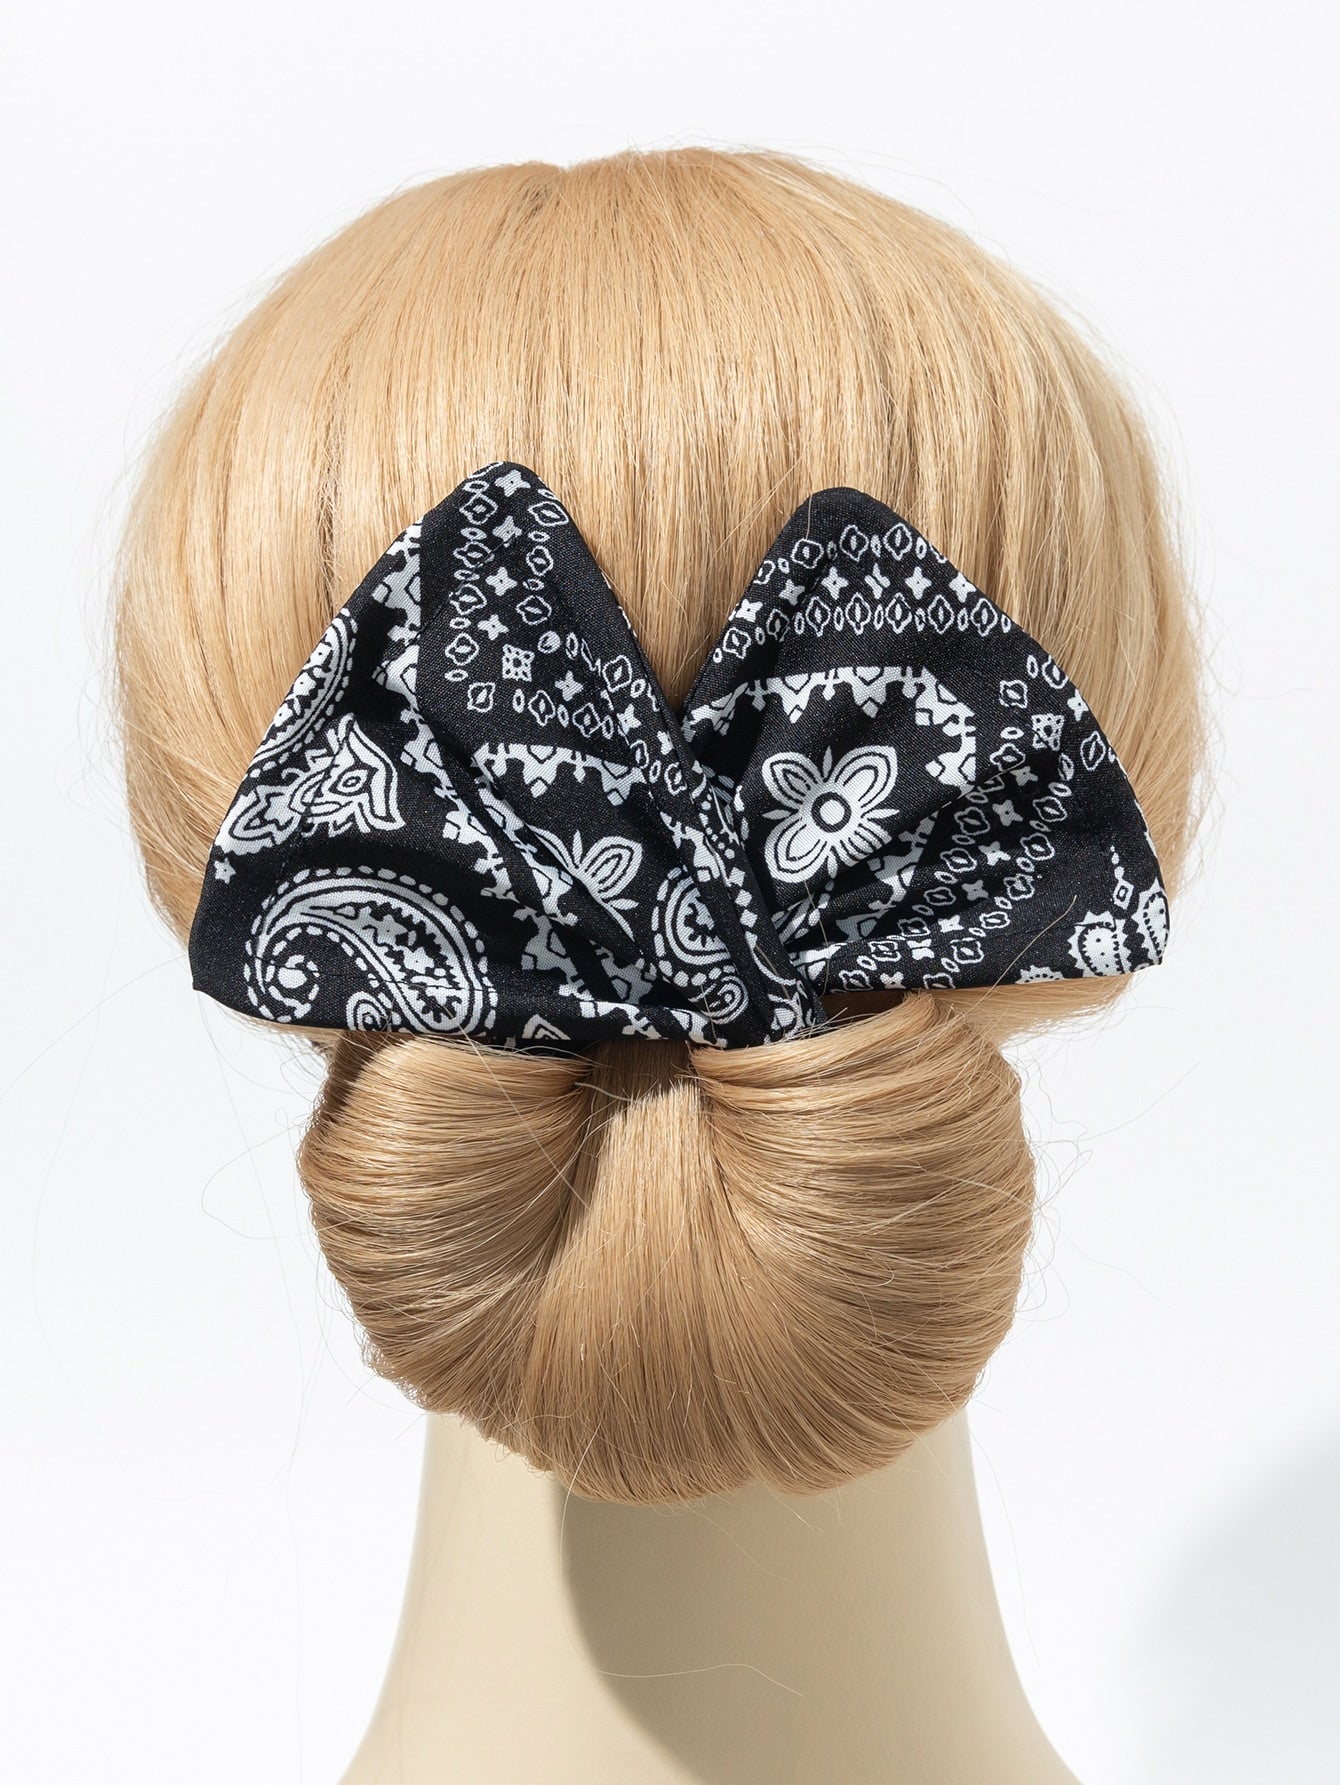 Paisley Print Hair Tie Ponytail Holder Elastic Hair Bands Styling Hair